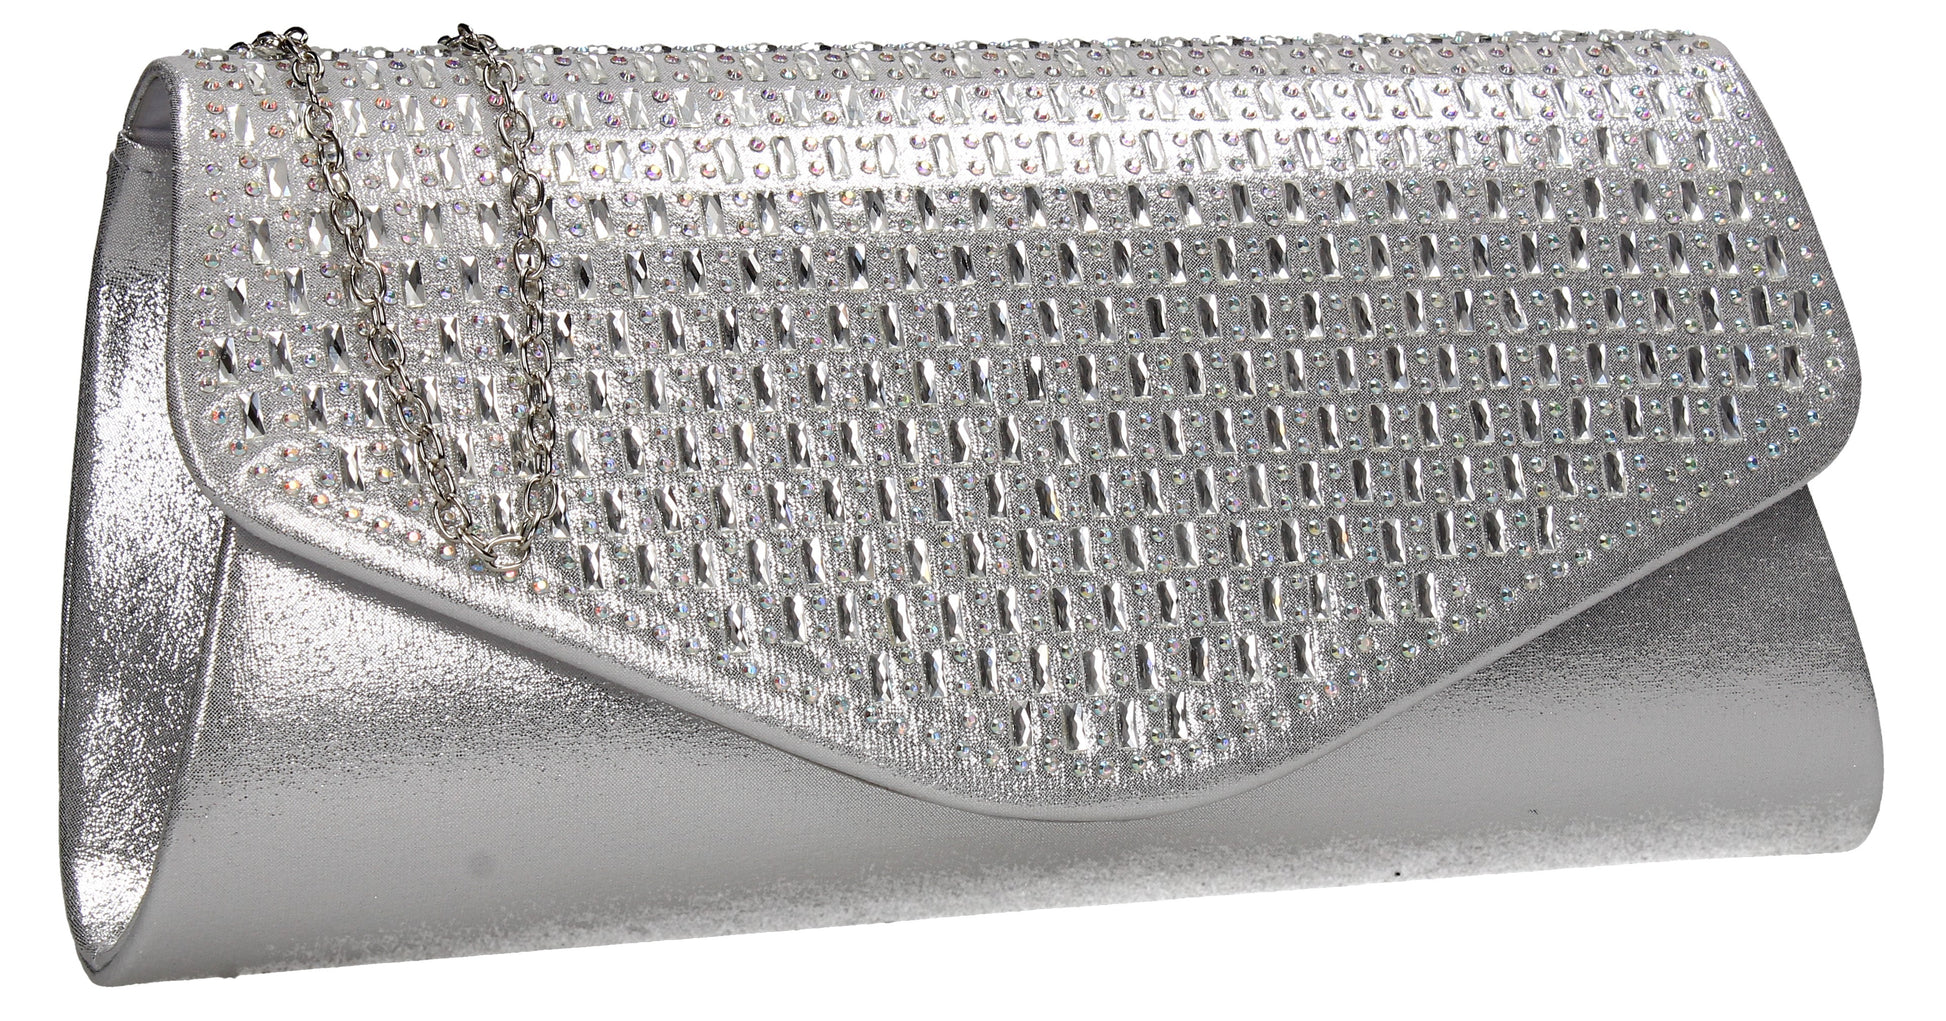 SWANKYSWANS Sally Diamante Clutch Bag Silver Cute Cheap Clutch Bag For Weddings School and Work